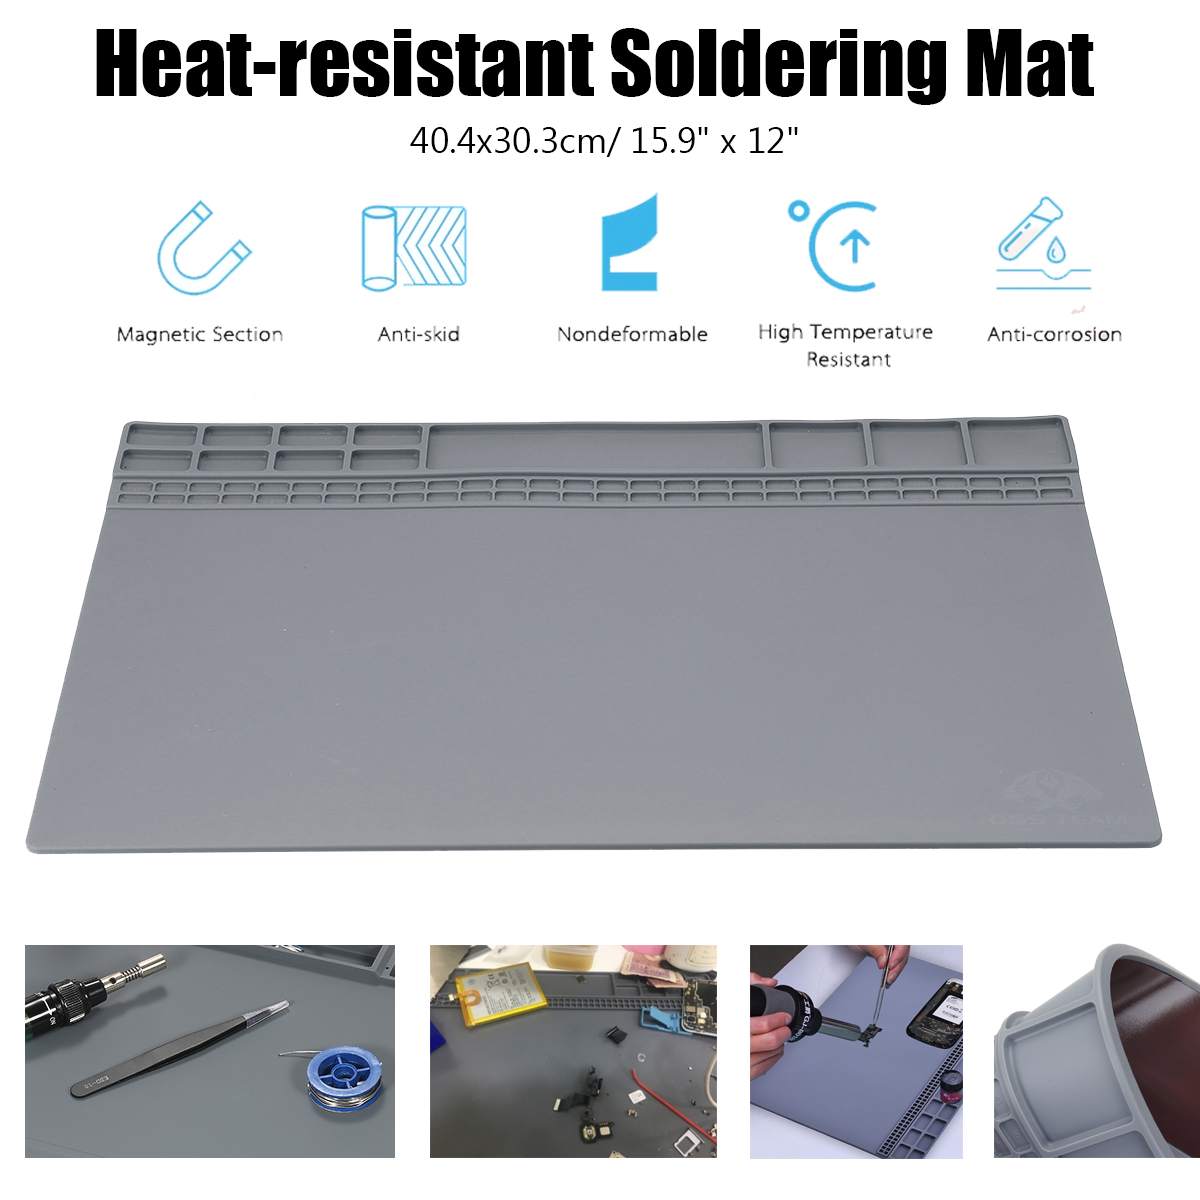 Insulation Pad Heat Resistant Soldering Station Silicon Soldering Mat Work Pad Desk Platform Soldering Repair Station